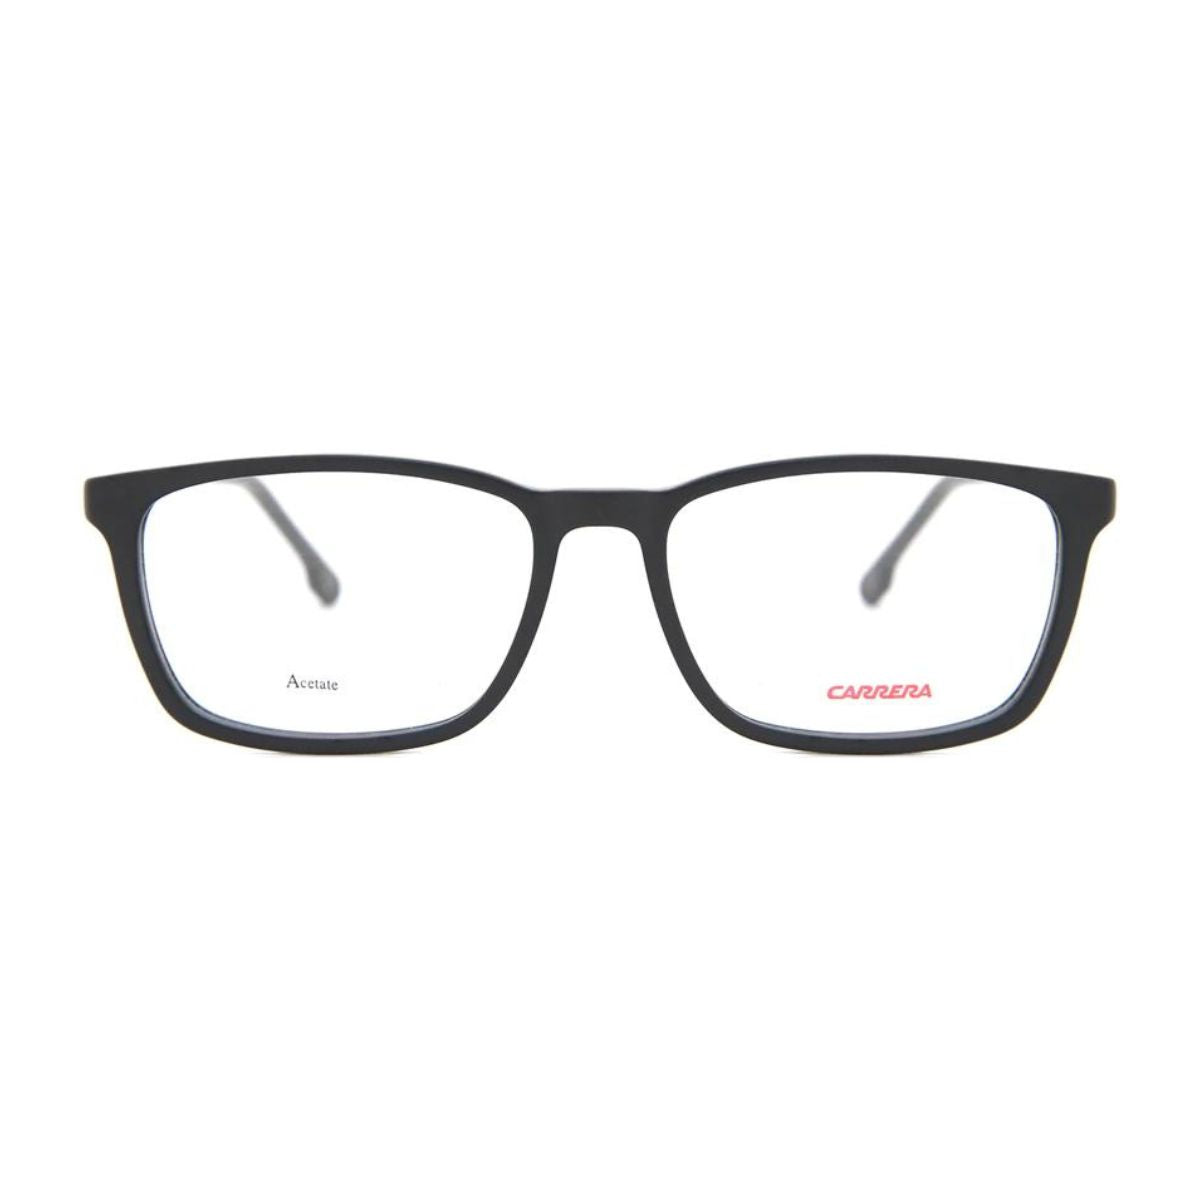 "Carrera 265 003 optical eyeglasses frame for men's and women's at optorium"